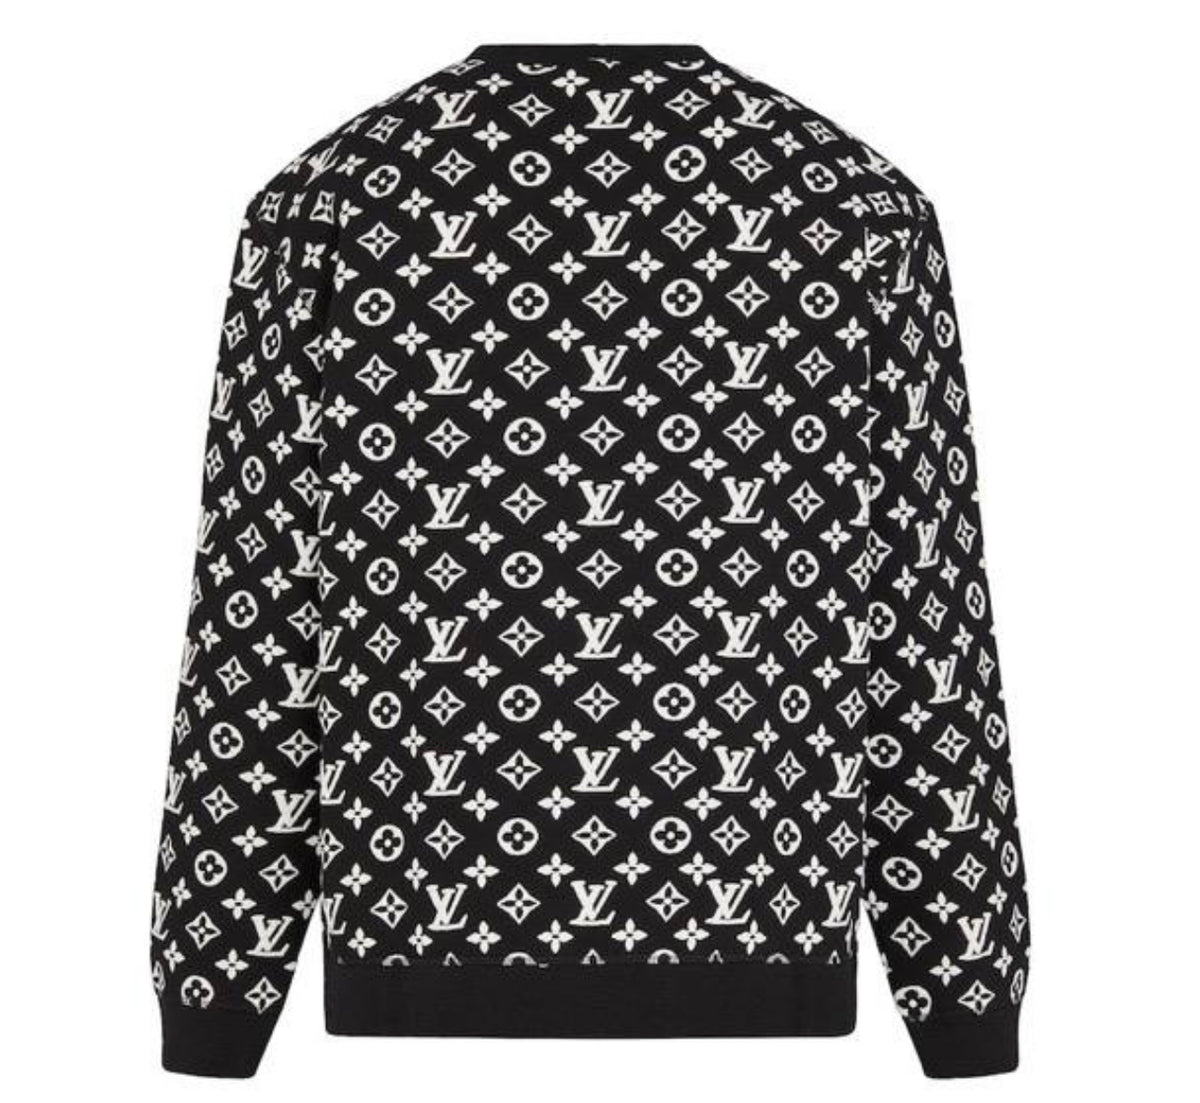 Louis Vuitton Purple And Beige Checkerboard Mens Sweater - Blinkenzo